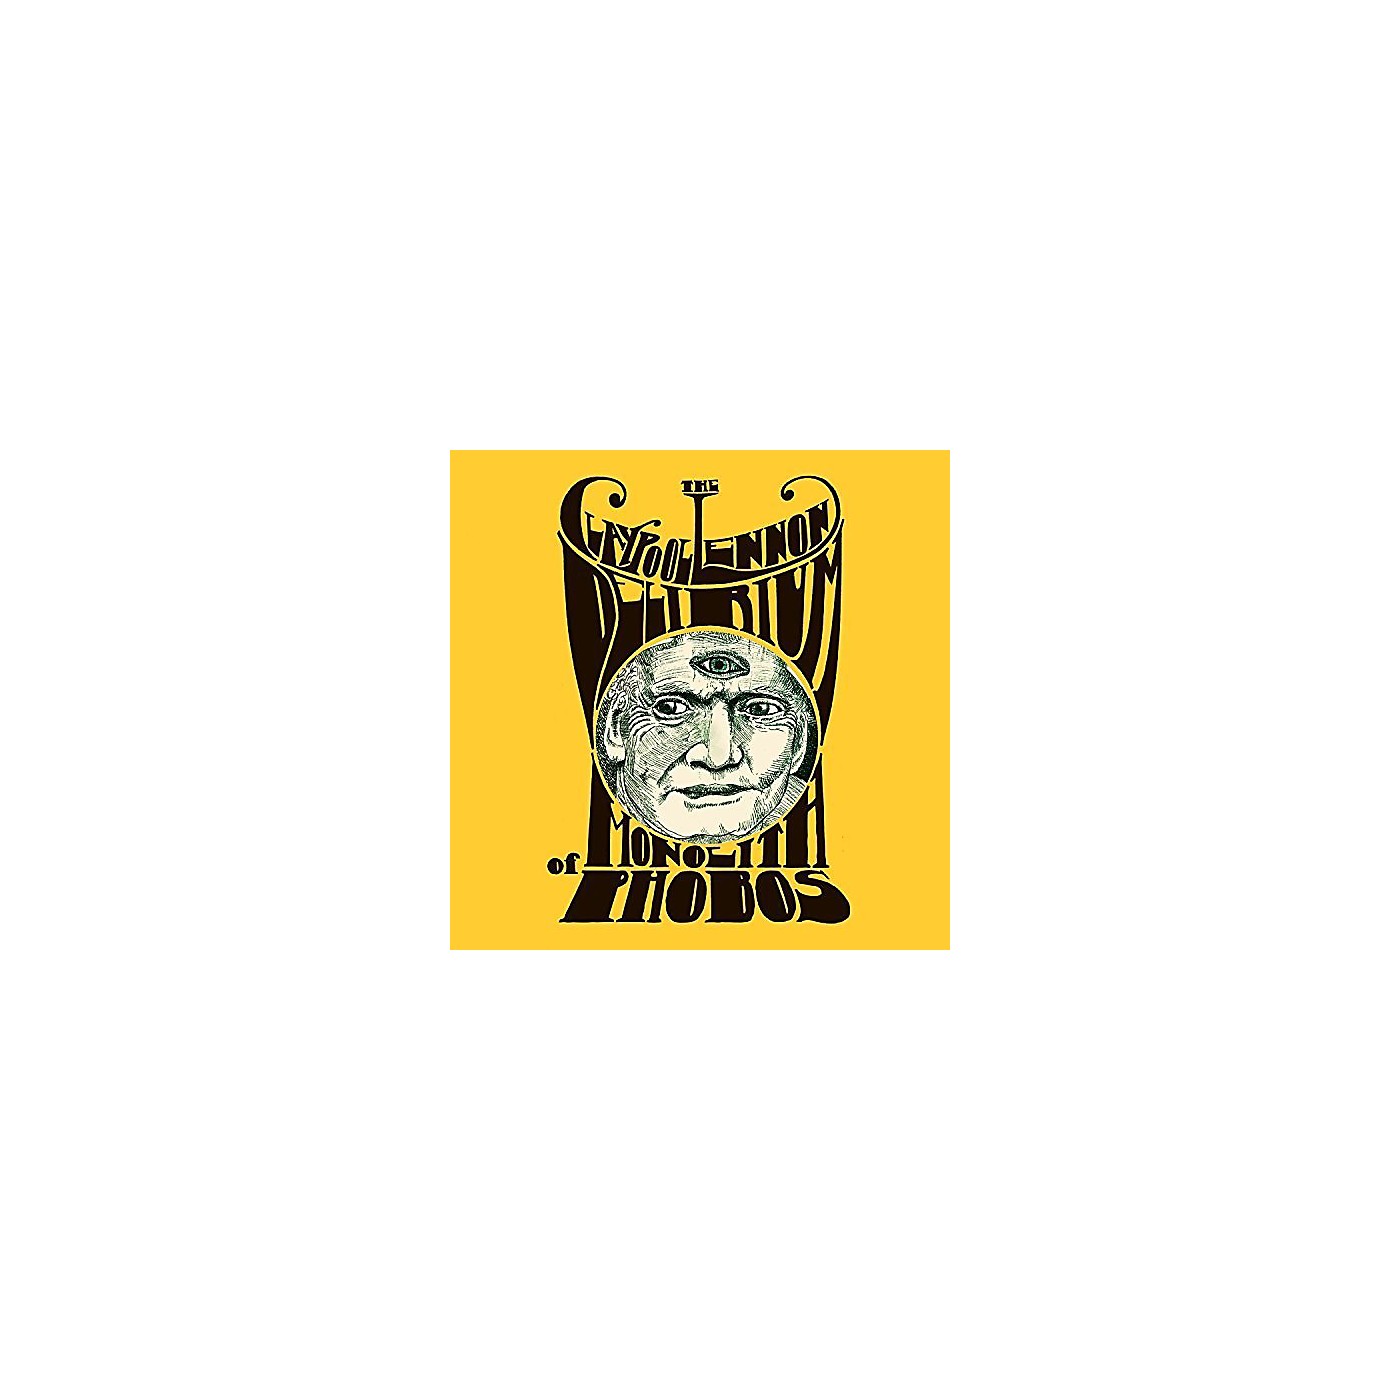 ALLIANCE Claypool Lennon Delirium - Monolith Of Phobos thumbnail